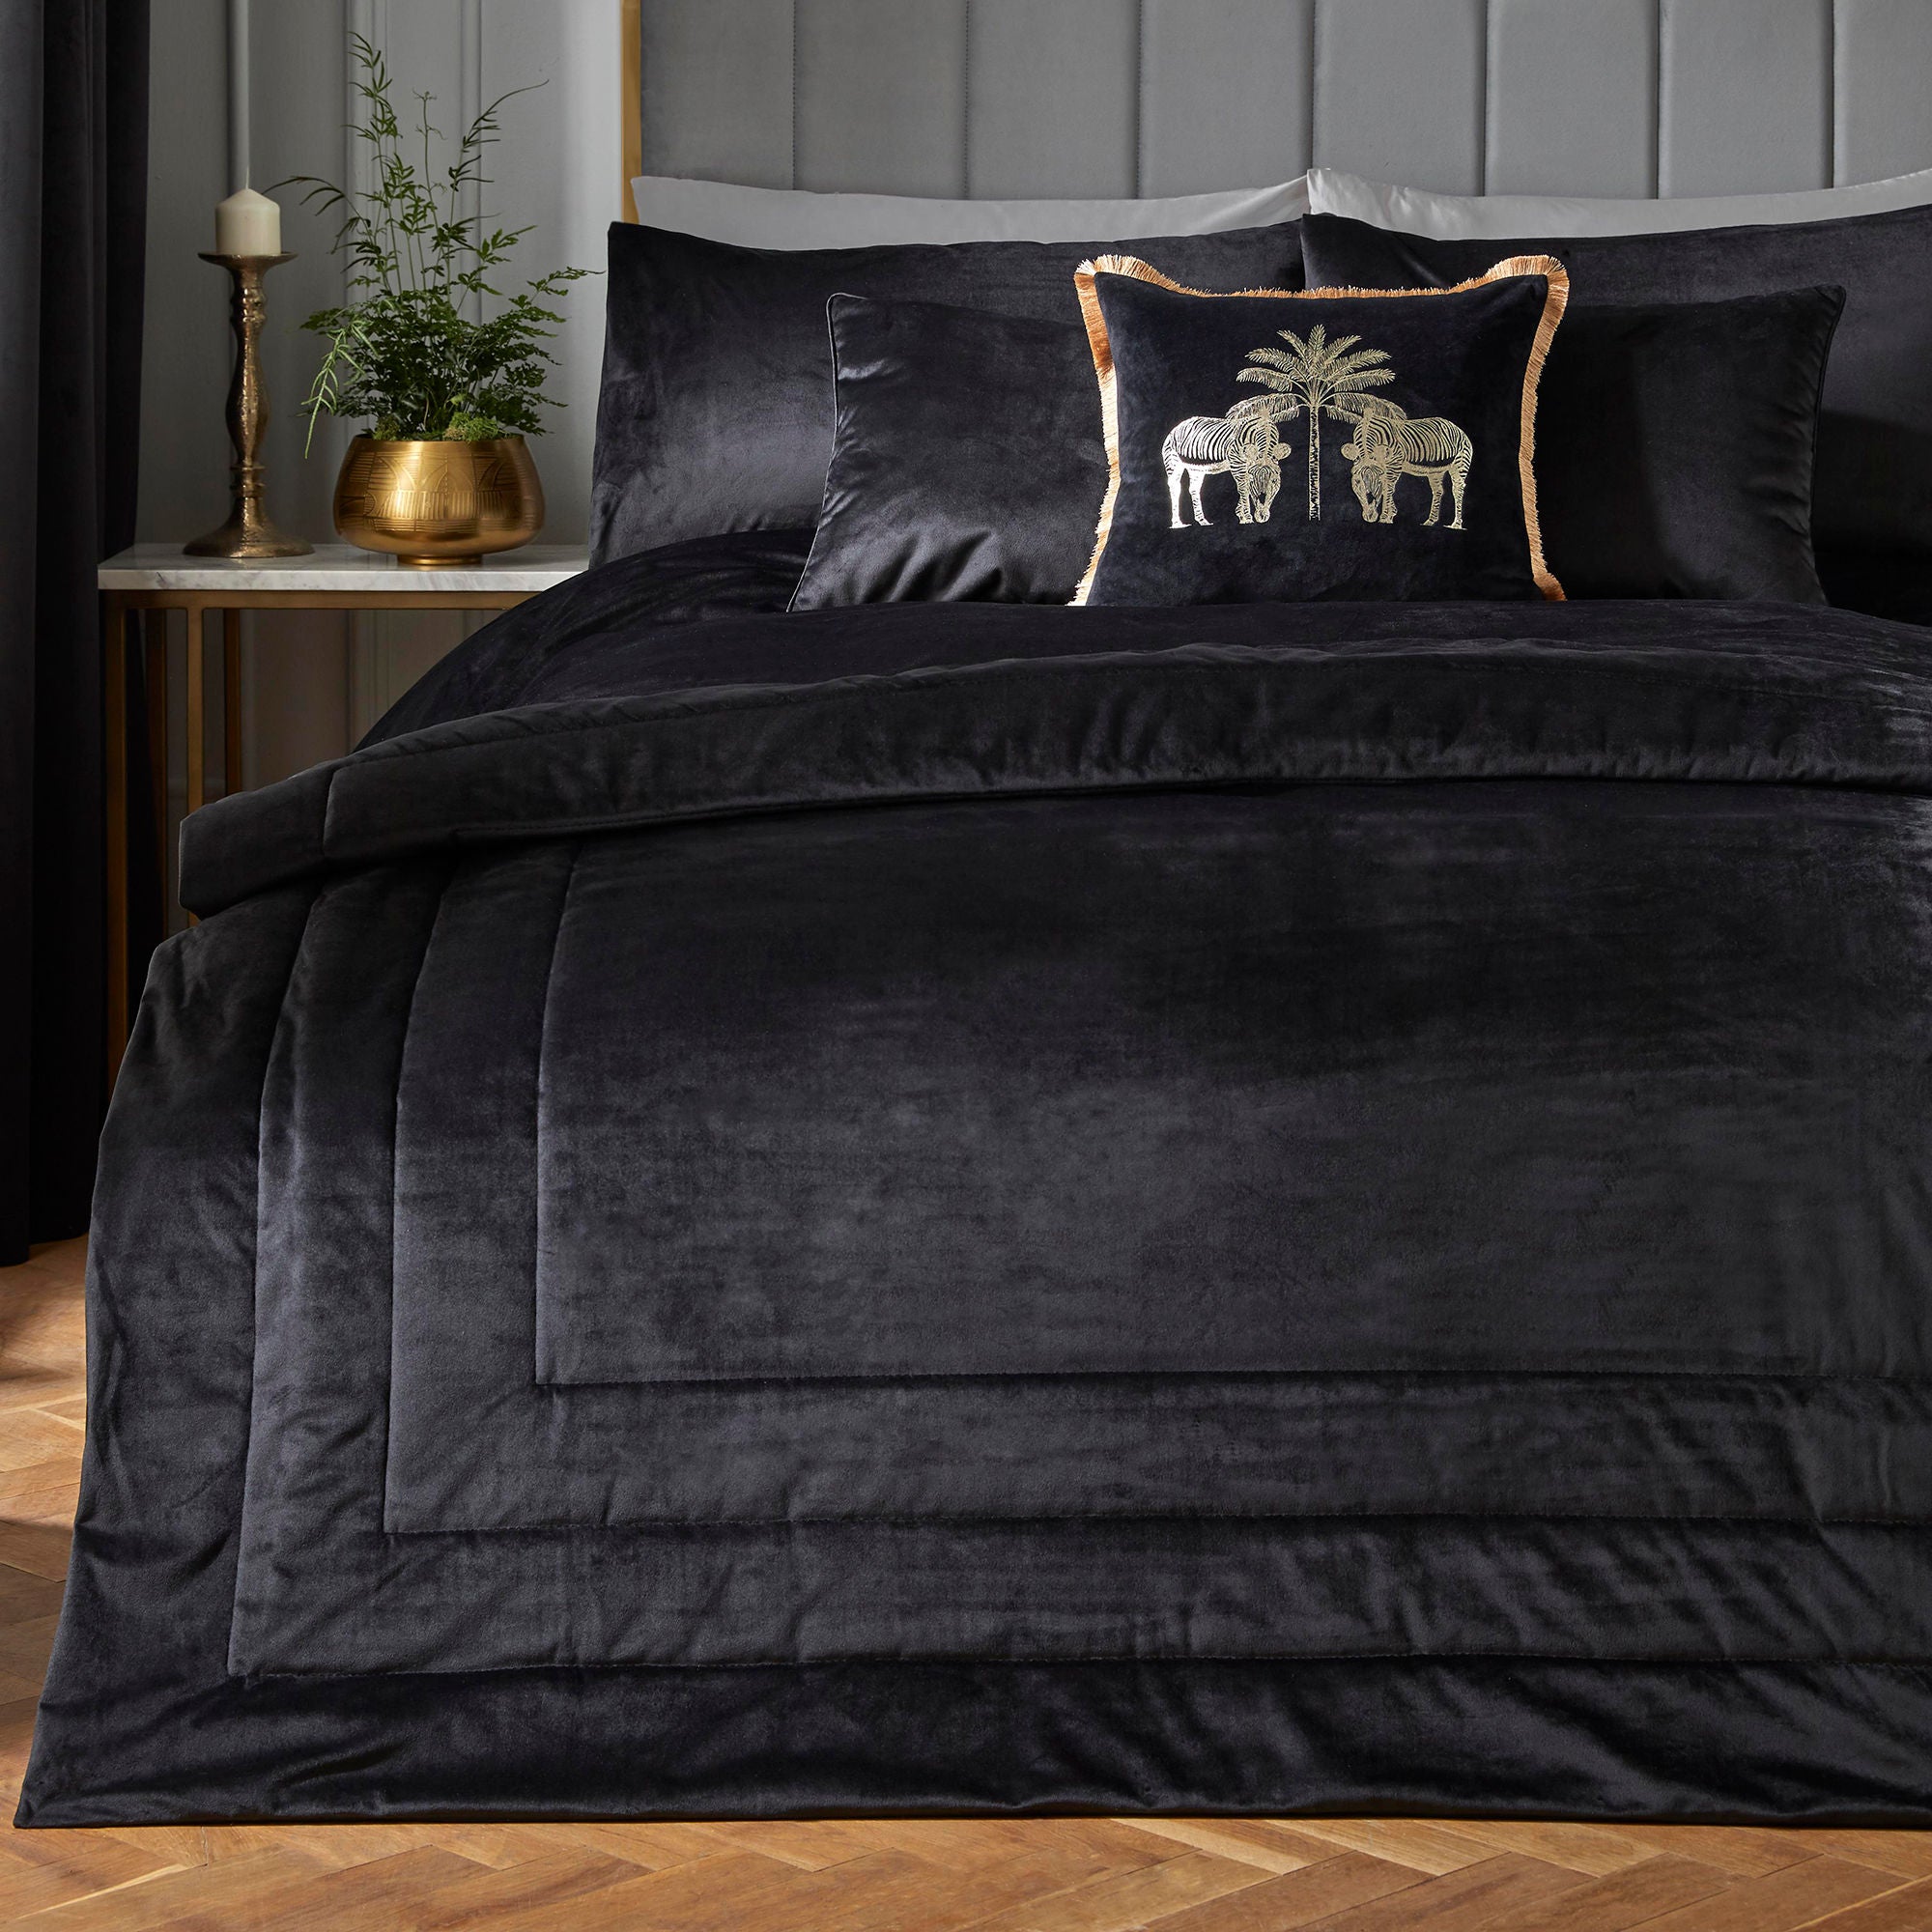 Chic Bedspread by Laurence Llewelyn-Bowen in Black 220 x 150cm - Bedspread - Laurence Llewelyn-Bowen